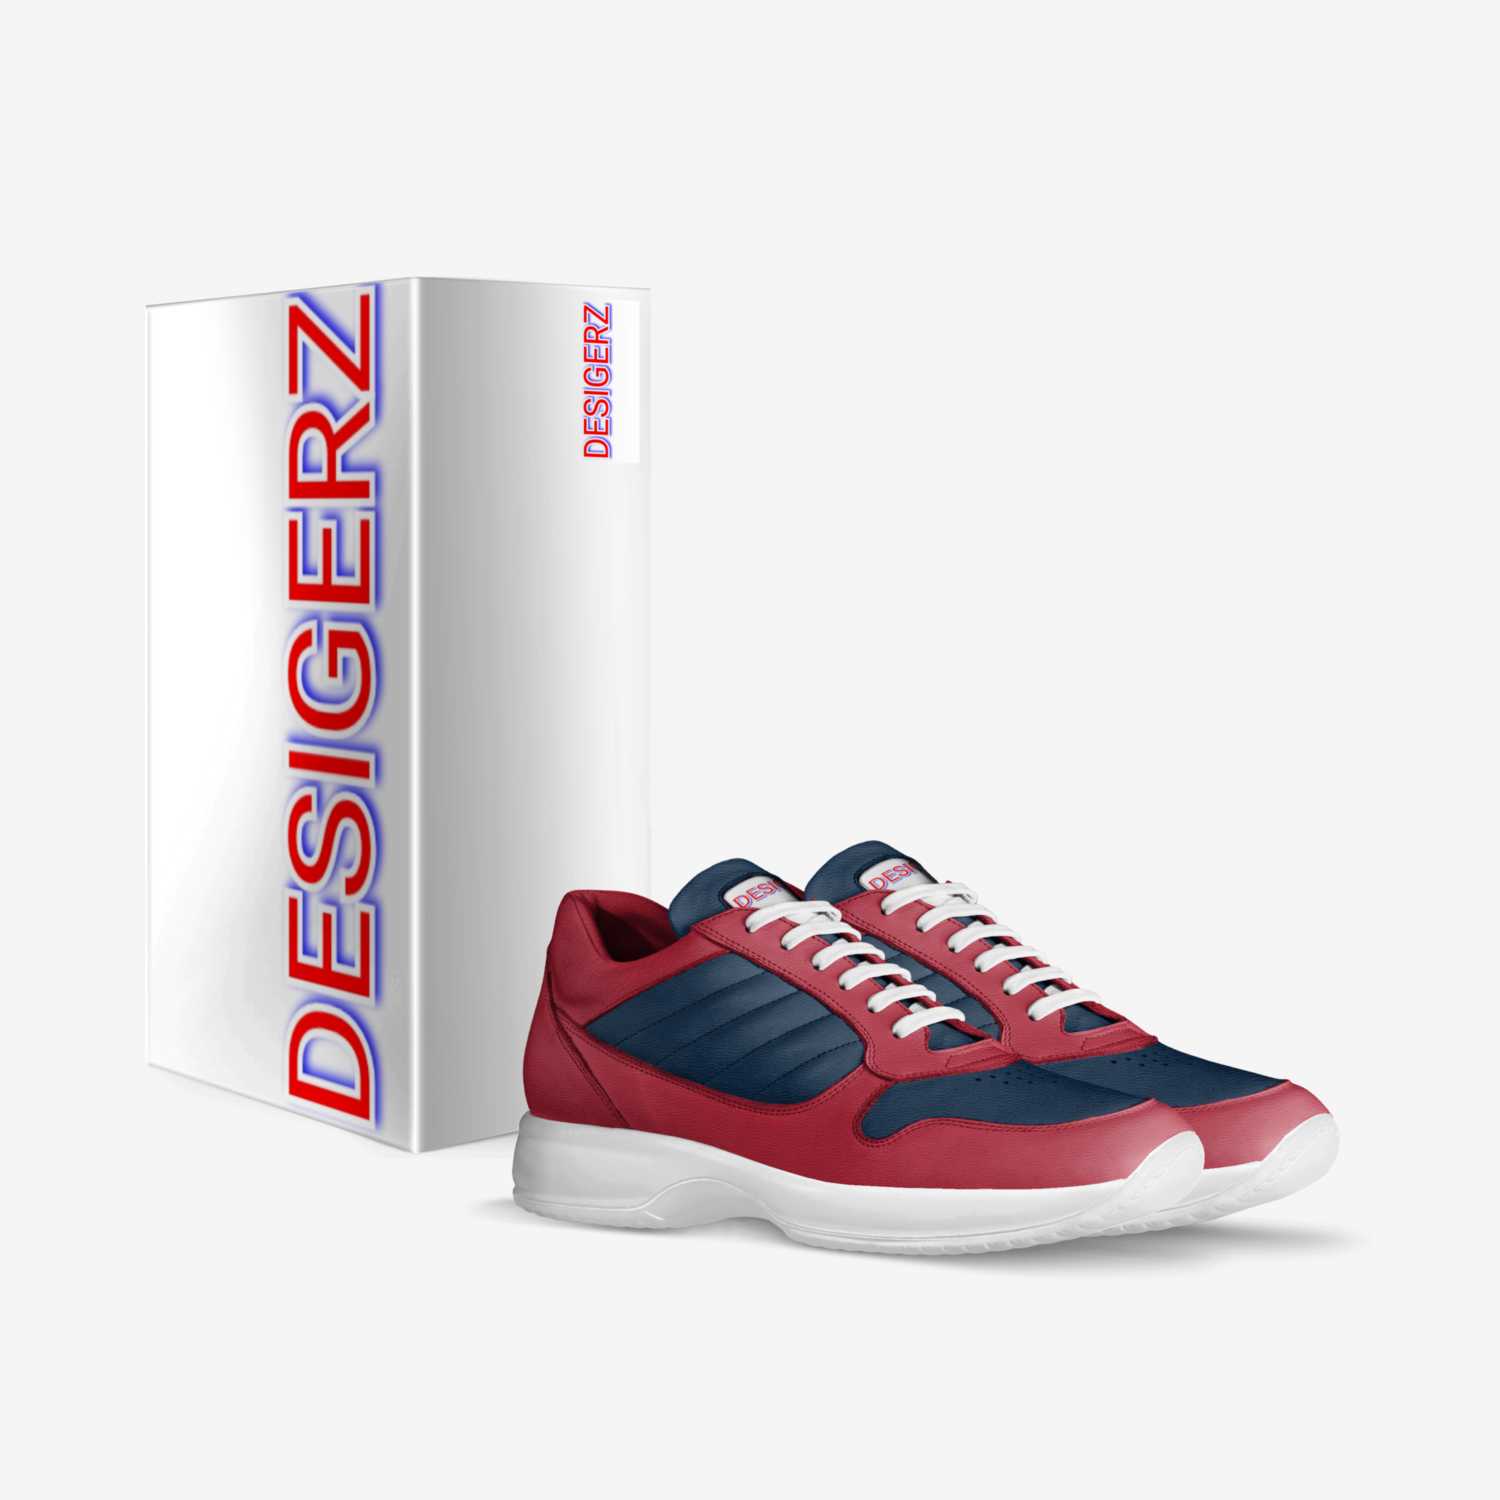 Desigerz custom made in Italy shoes by Desigerz Desigerz | Box view